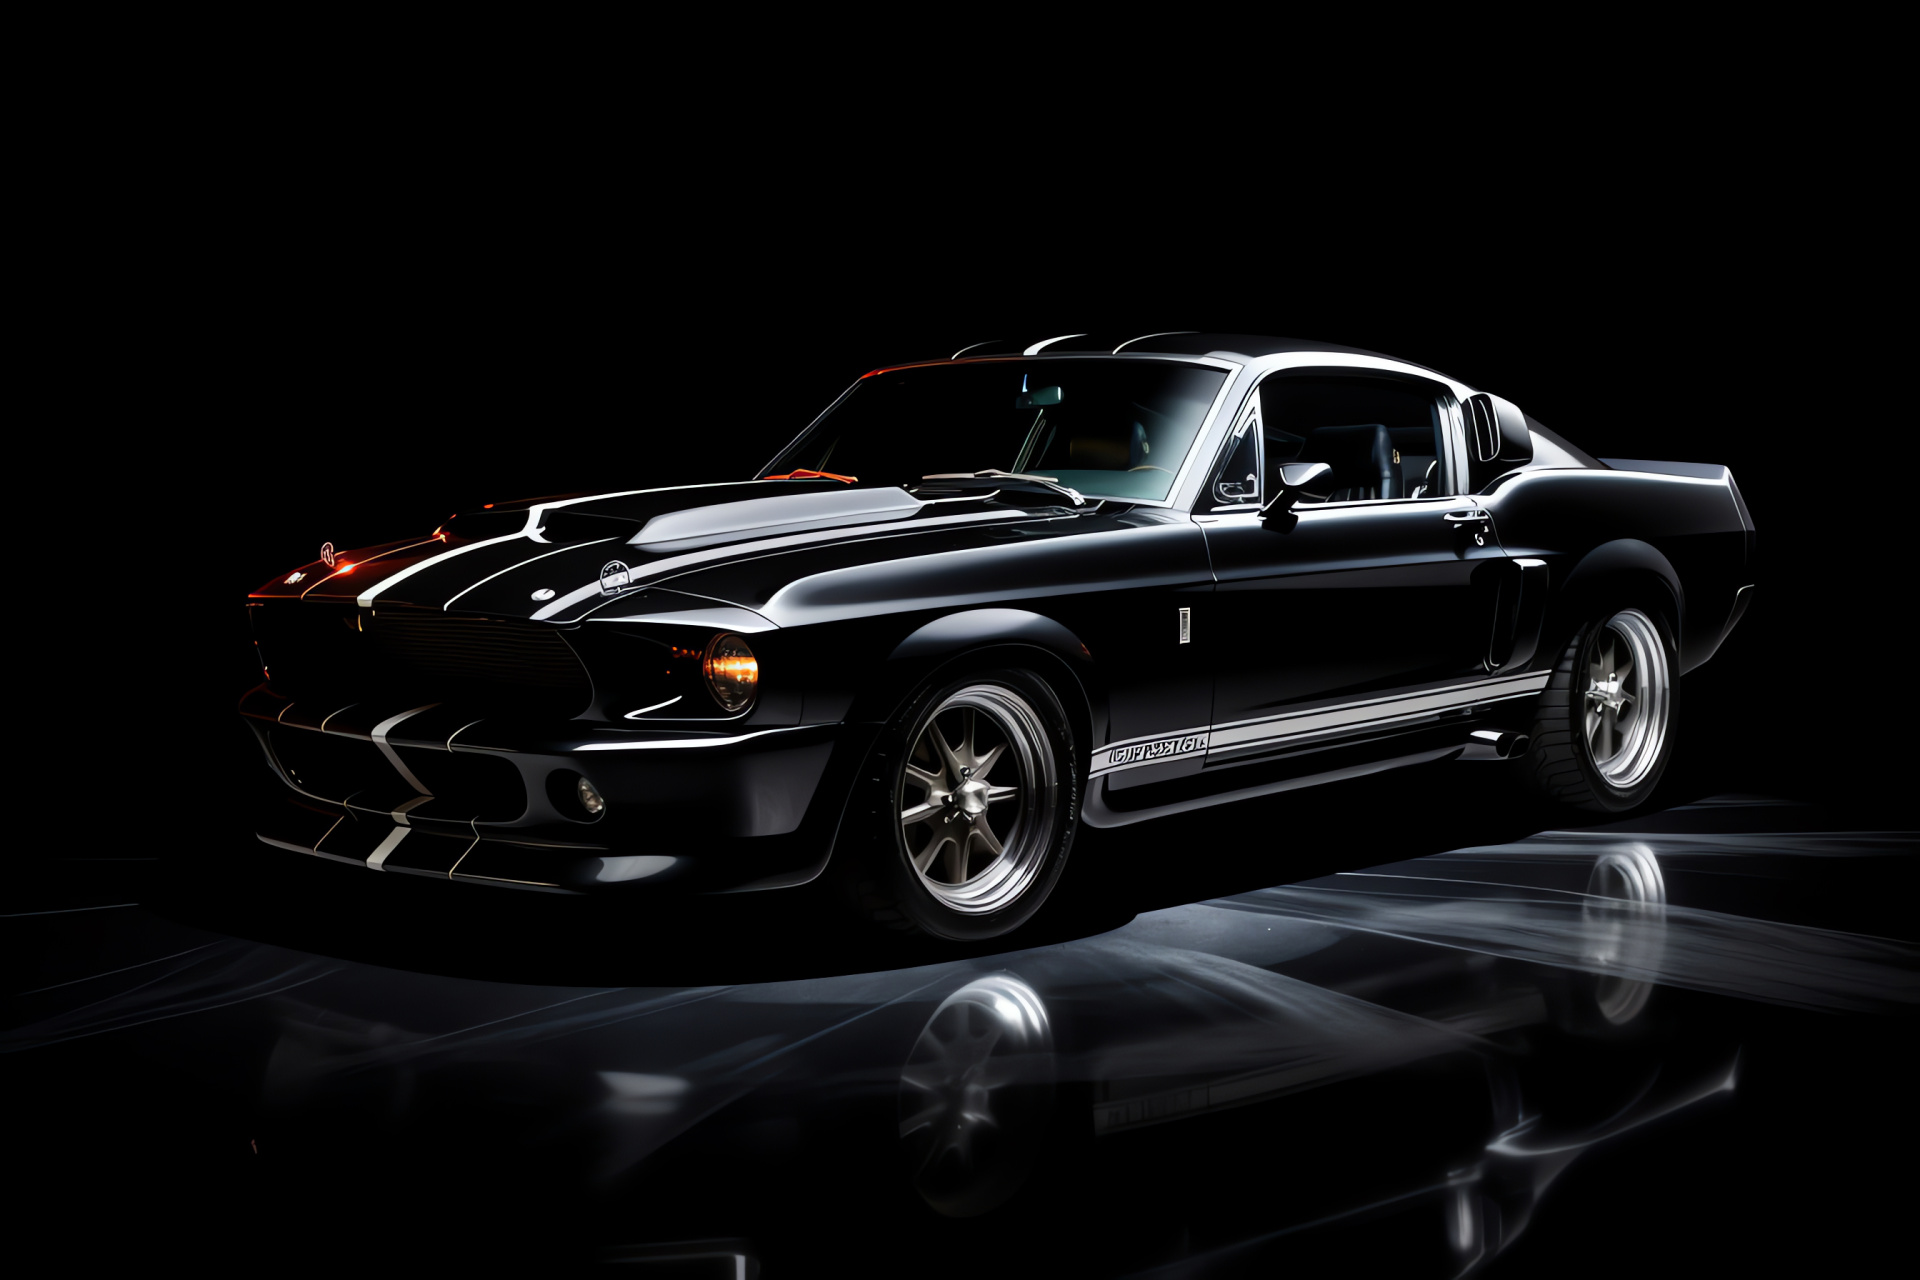 Black Mustang, Elevated angle, Dominant pose, Automotive character, Road presence, HD Desktop Wallpaper